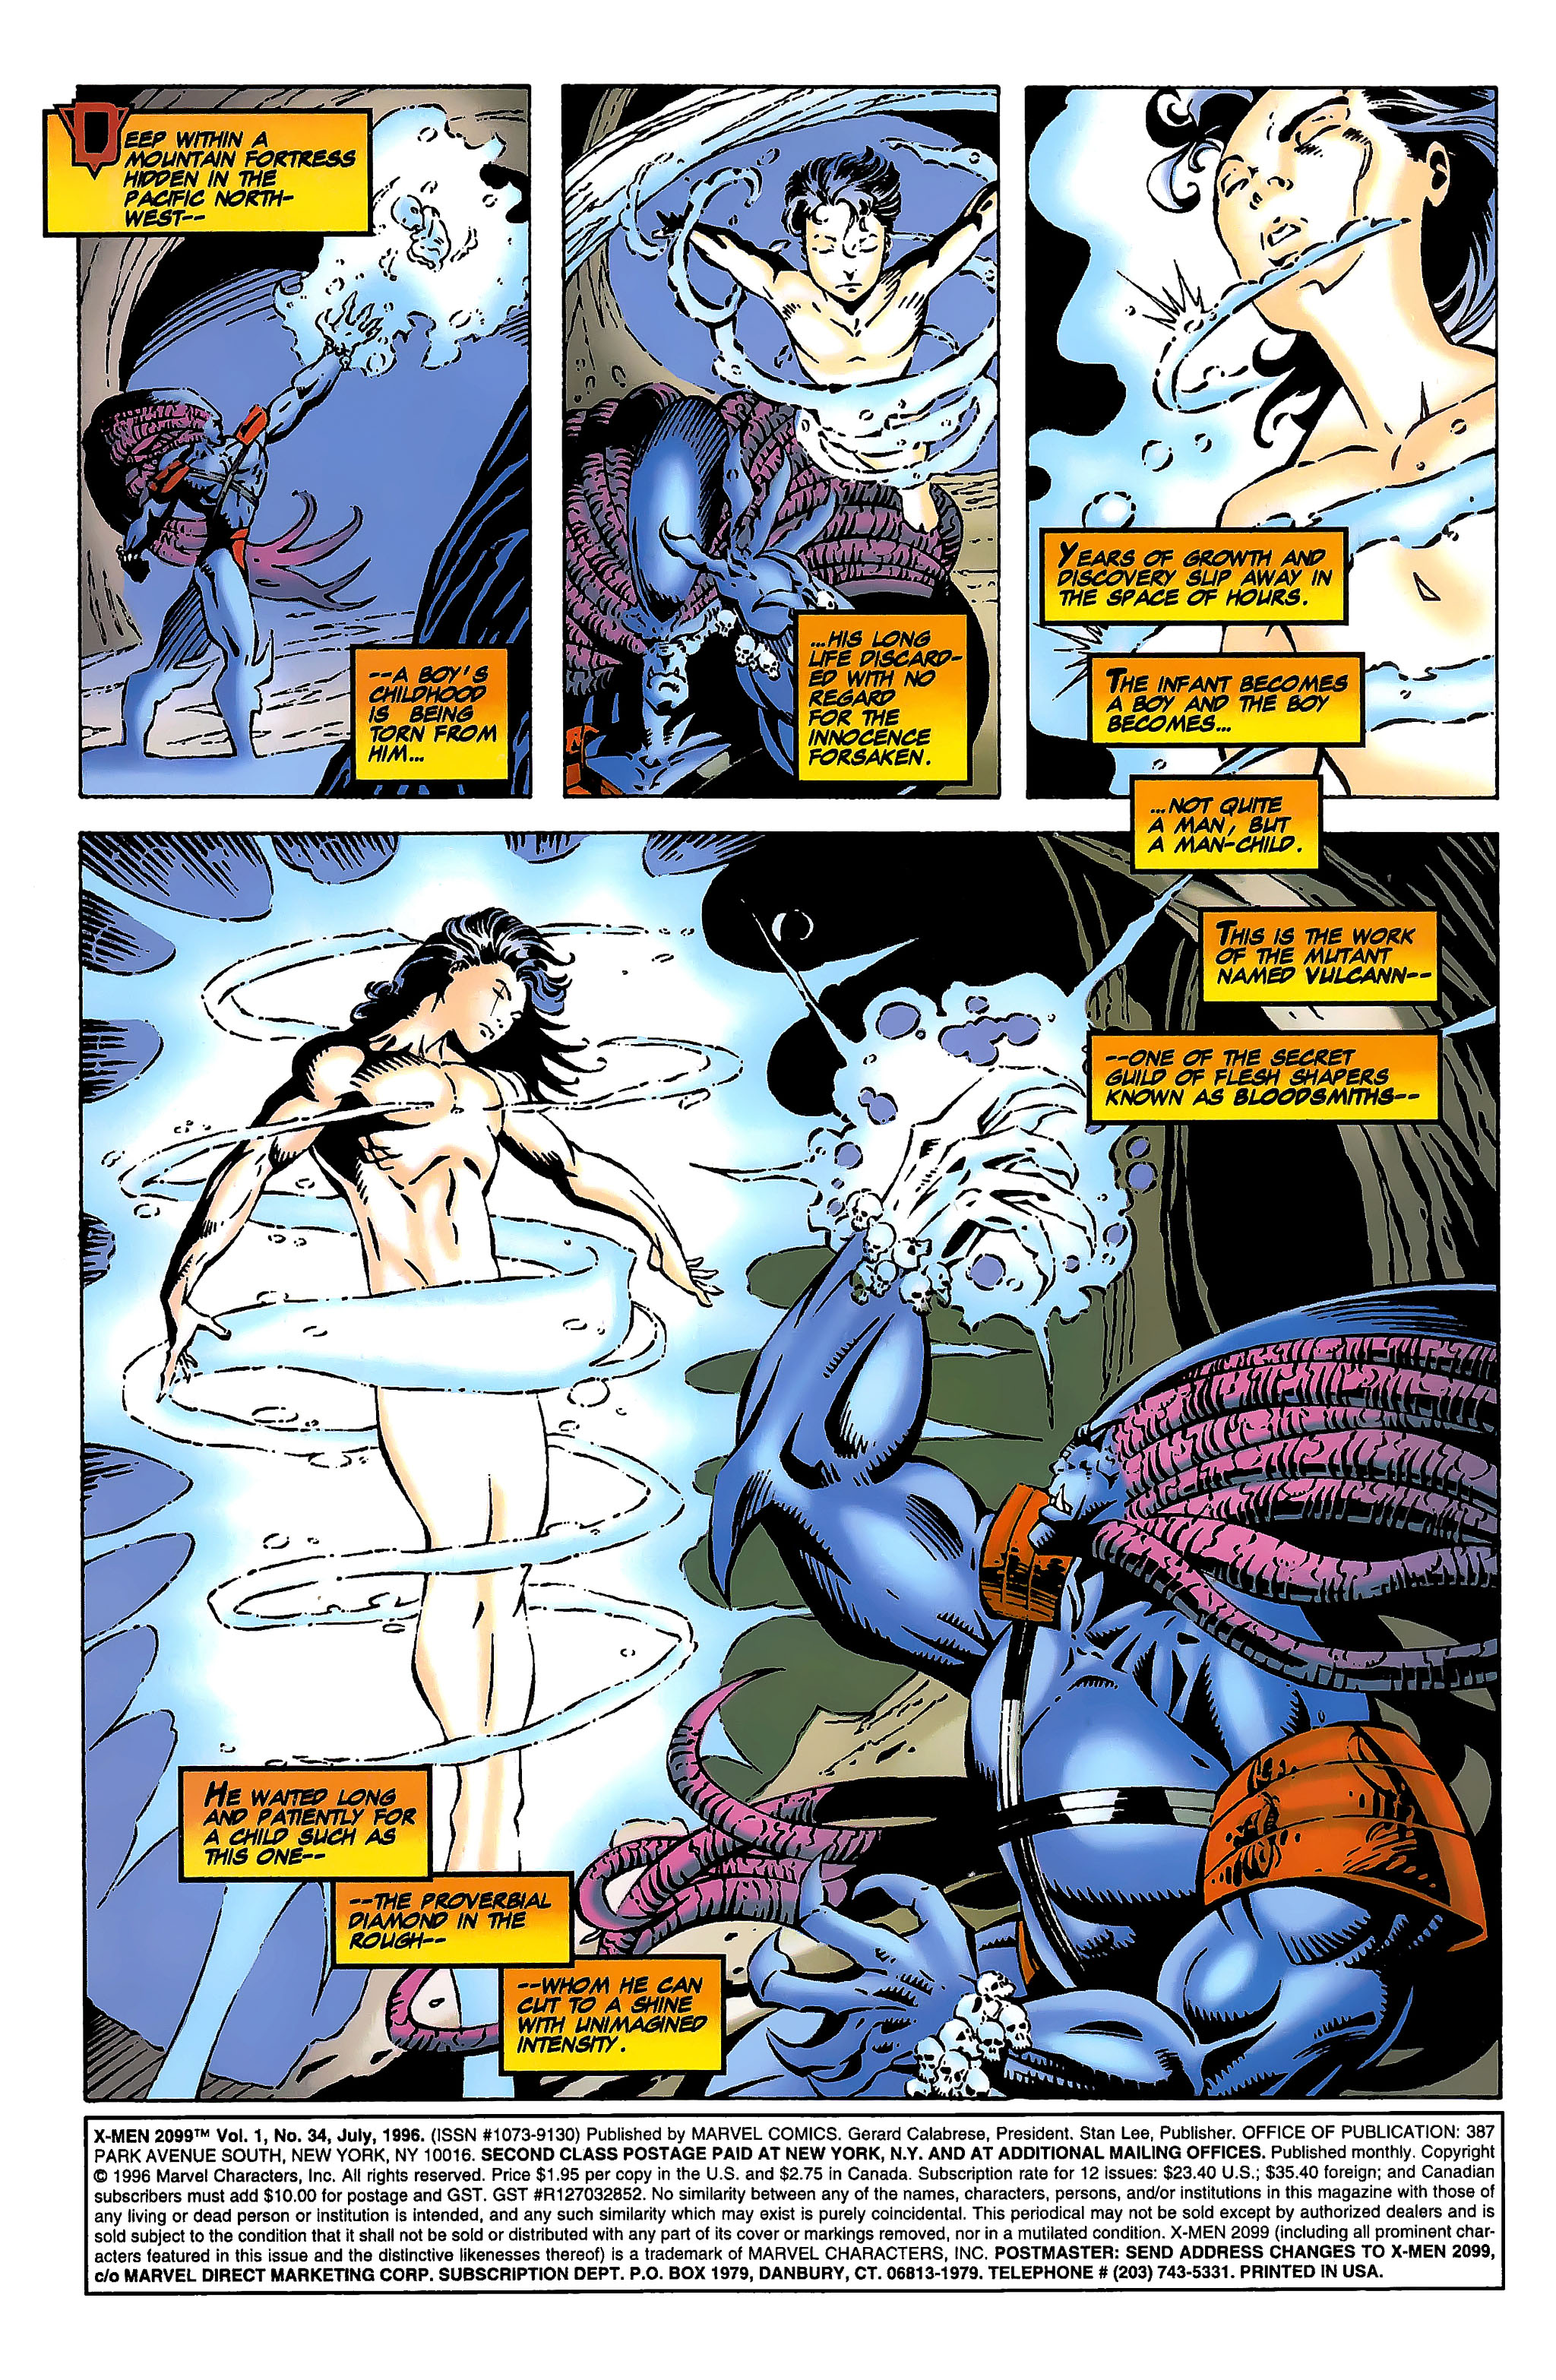 Read online X-Men 2099 comic -  Issue #34 - 2